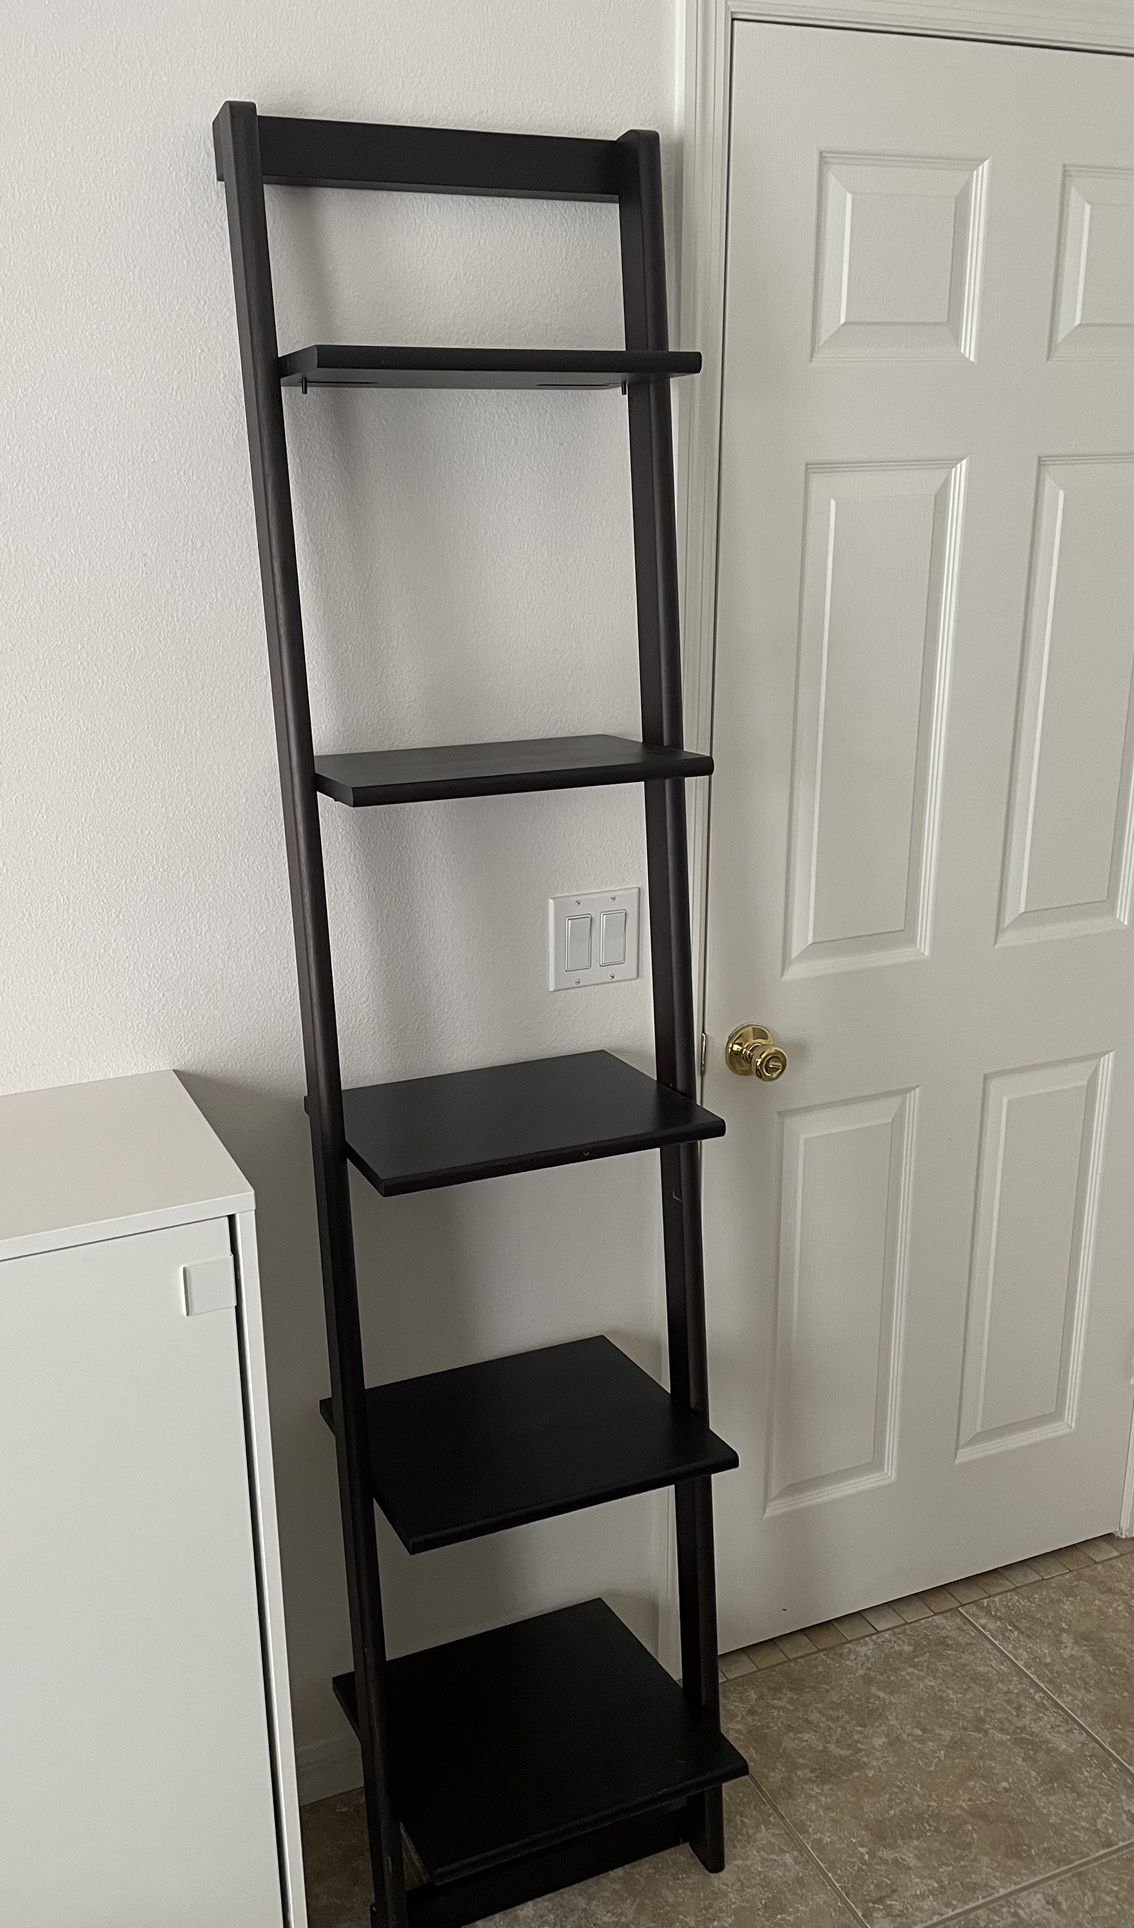 Leaning Ladder Shelves (set of 2)